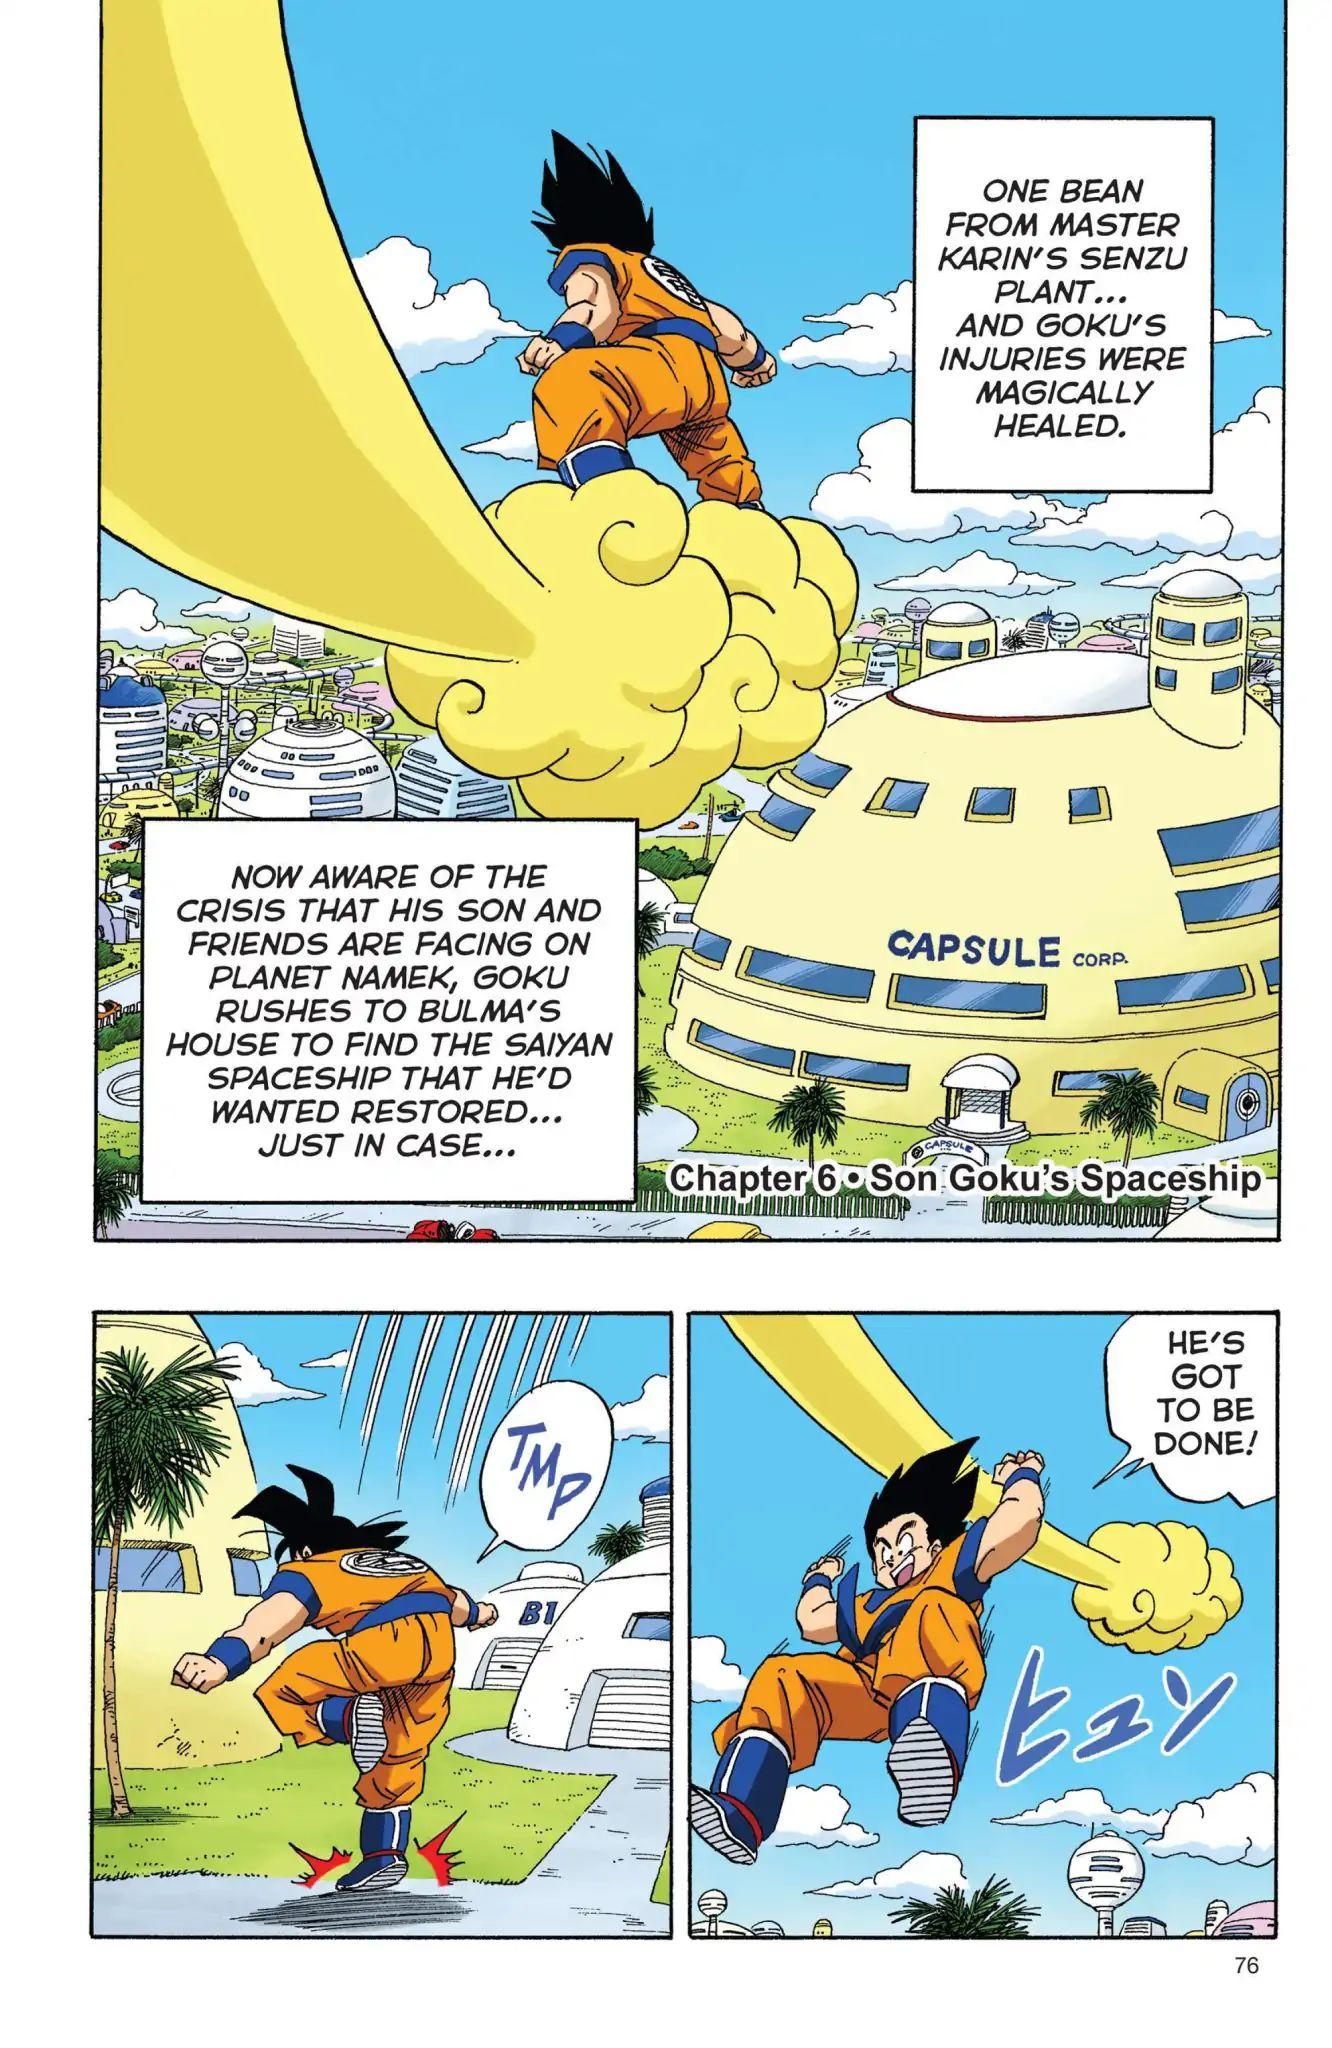 Read Dragon Ball Full Color Freeza Arc  Chapter 006: Son Goku S  Spaceship on Mangakakalot